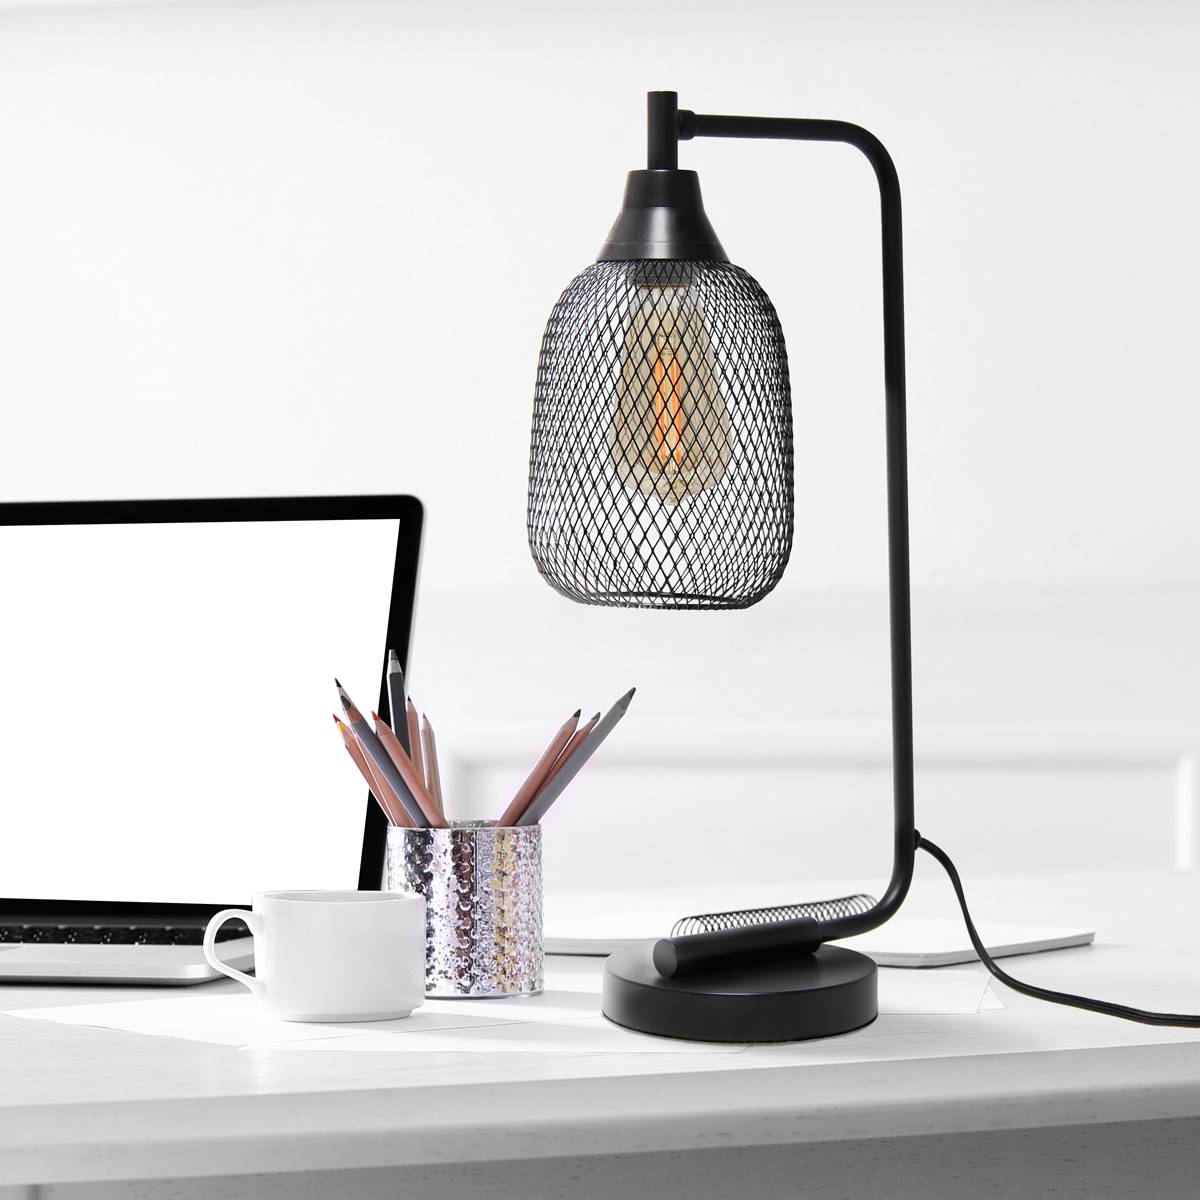 Lalia Home Studio Loft Industrial Mesh Desk Lamp